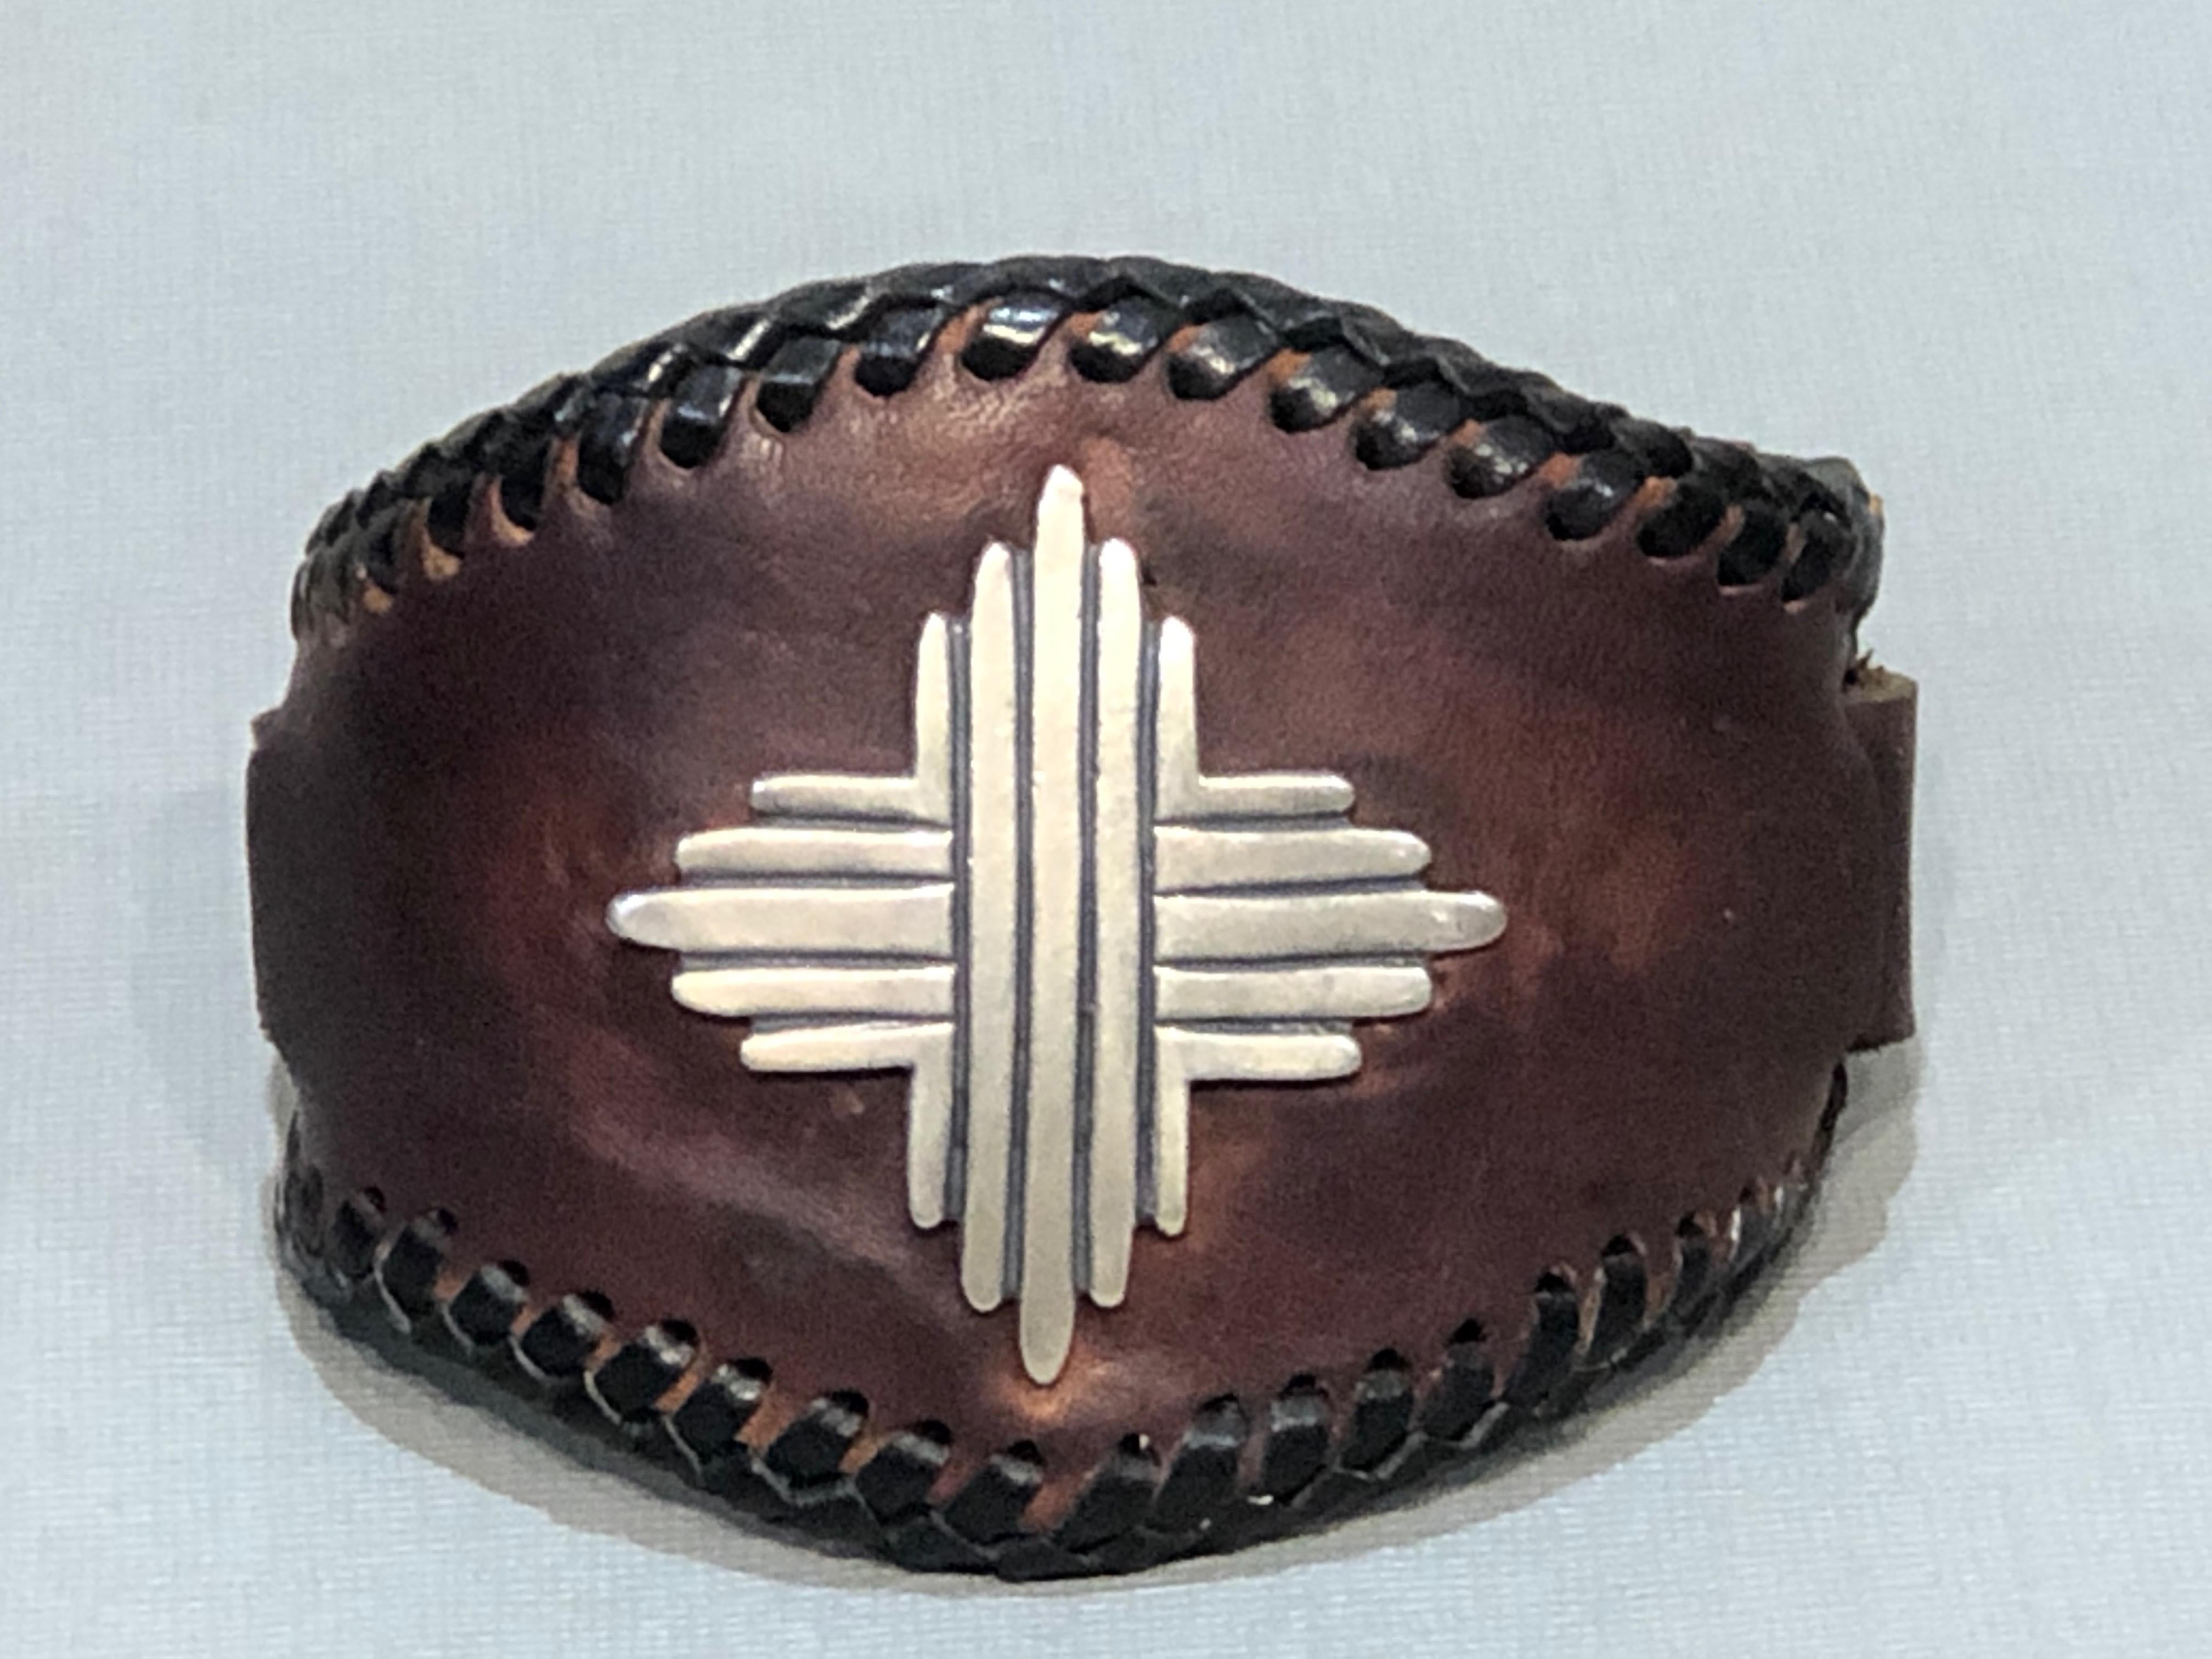 Silver Sun, leather cuff, sterling silver, brown, black, cast silver, Santa Fe

Made in Santa Fe - Glenn Green Galleries